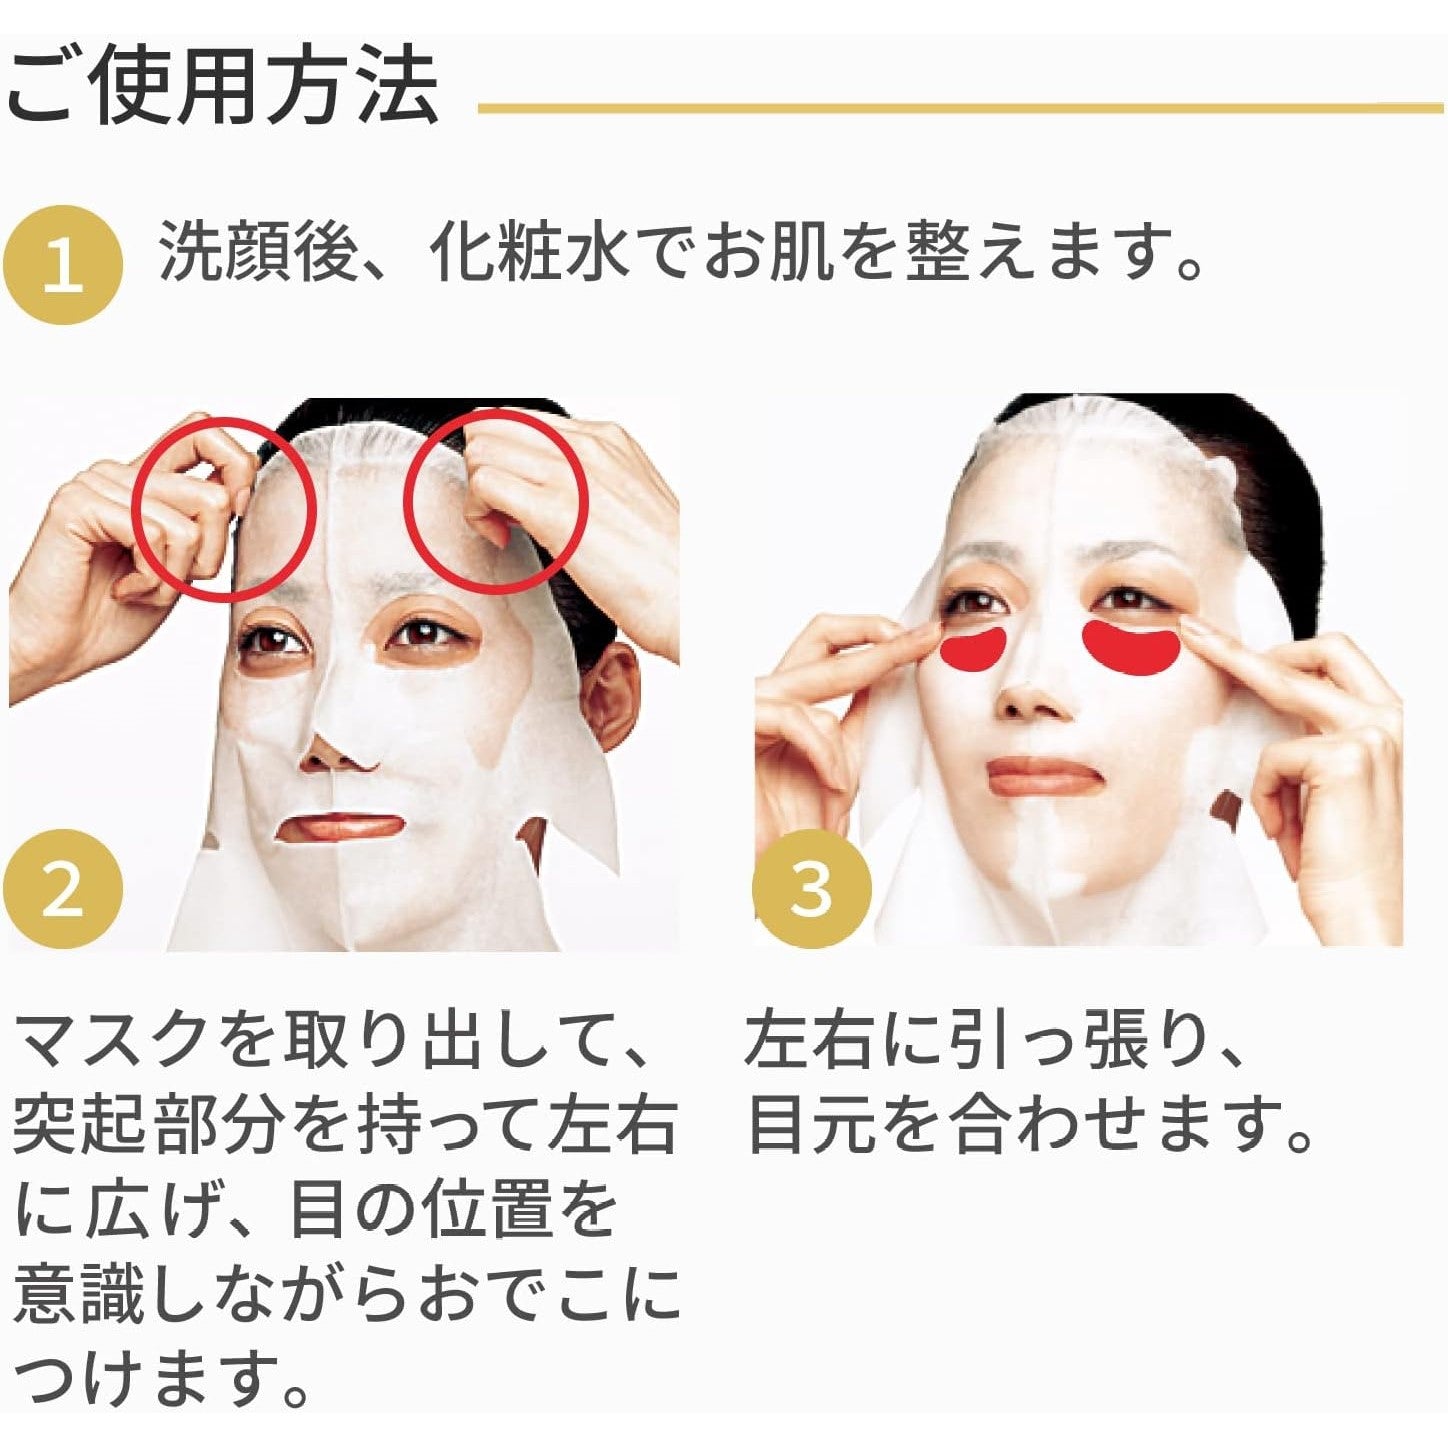 Kracie Hadabisei Ultra Penetrating 3D Face Mask Brightening